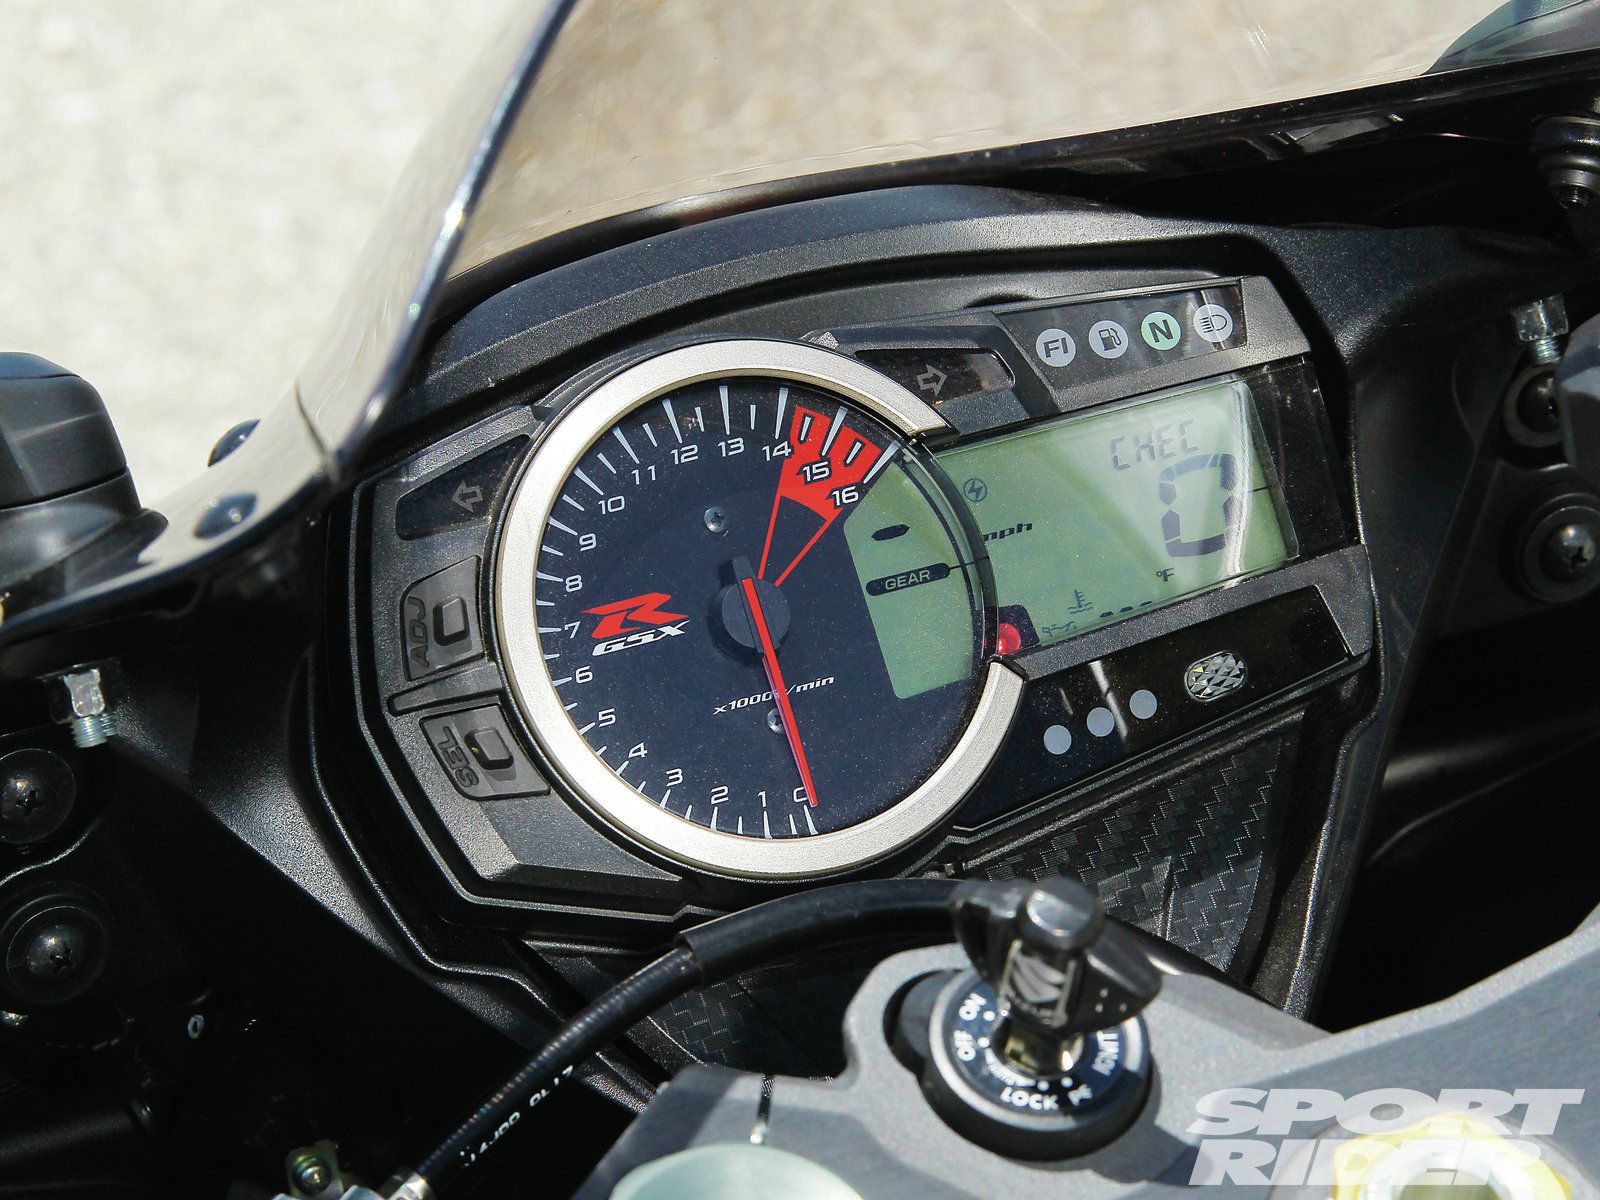 Suzuki GSX-R 600 2000 Front Left Replica/Replacement Indicator